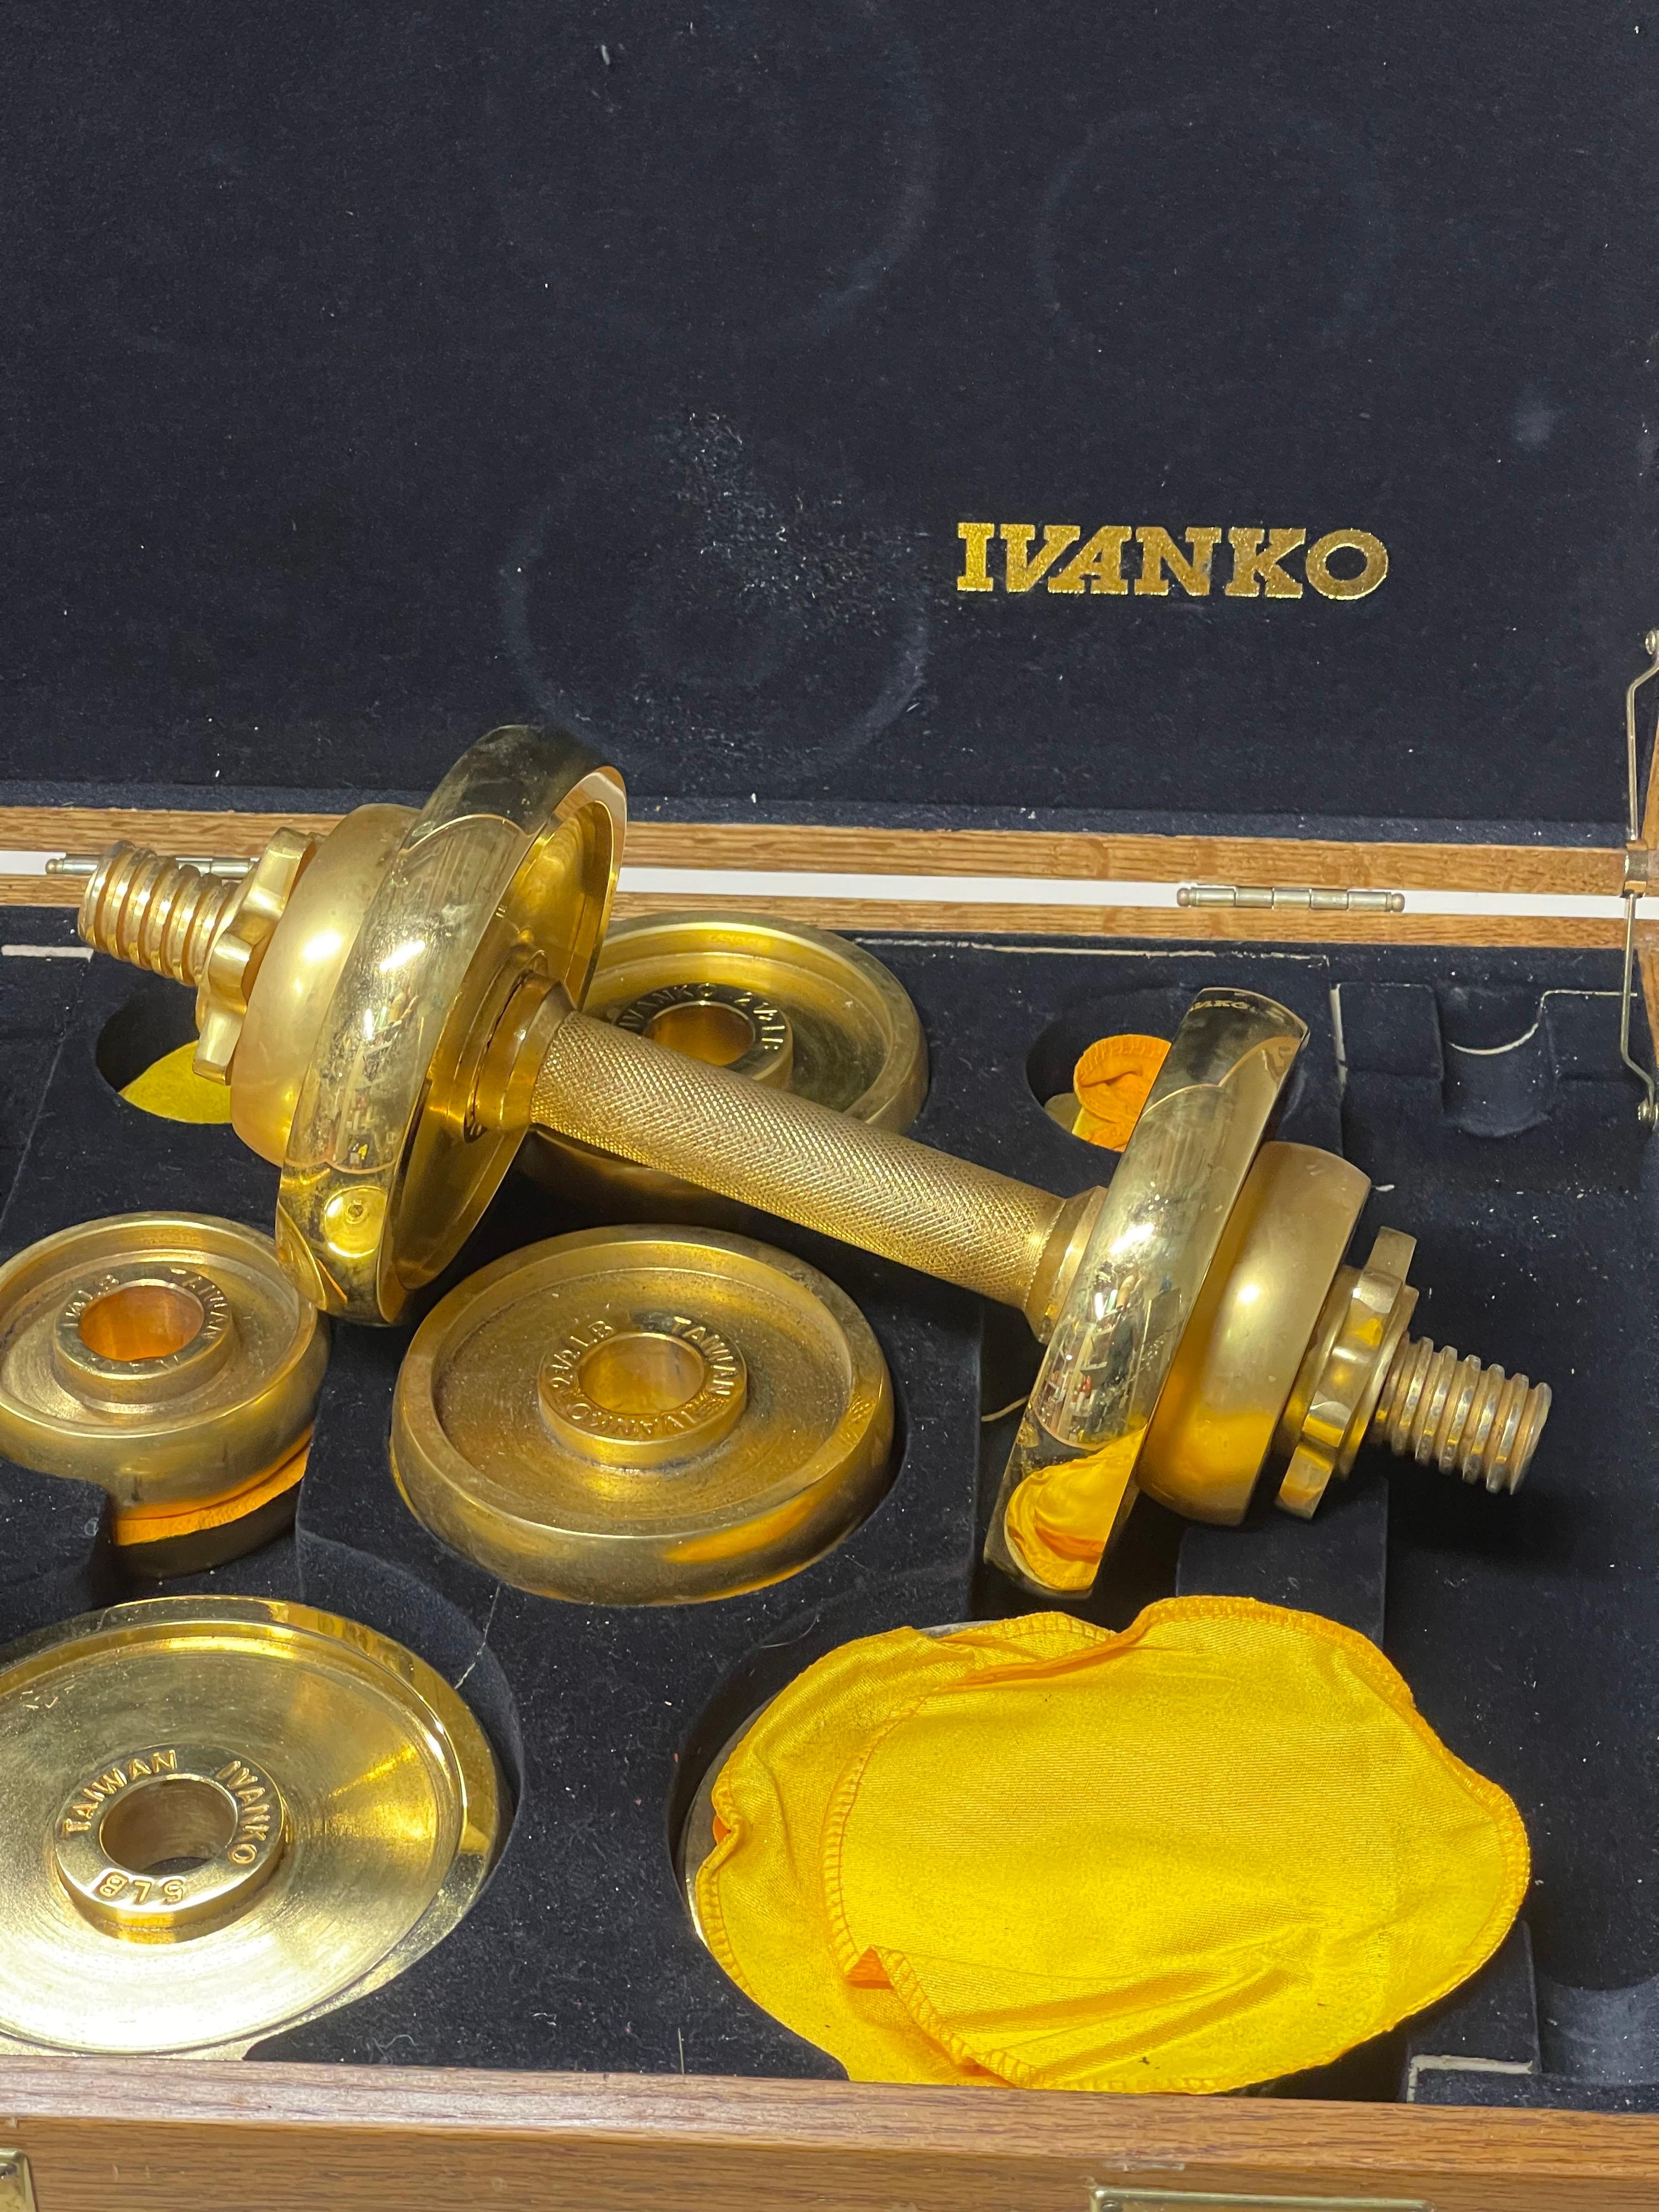 Steel 1980’s Ivanko 22 Karat Gold Plated Weight Set For Sale